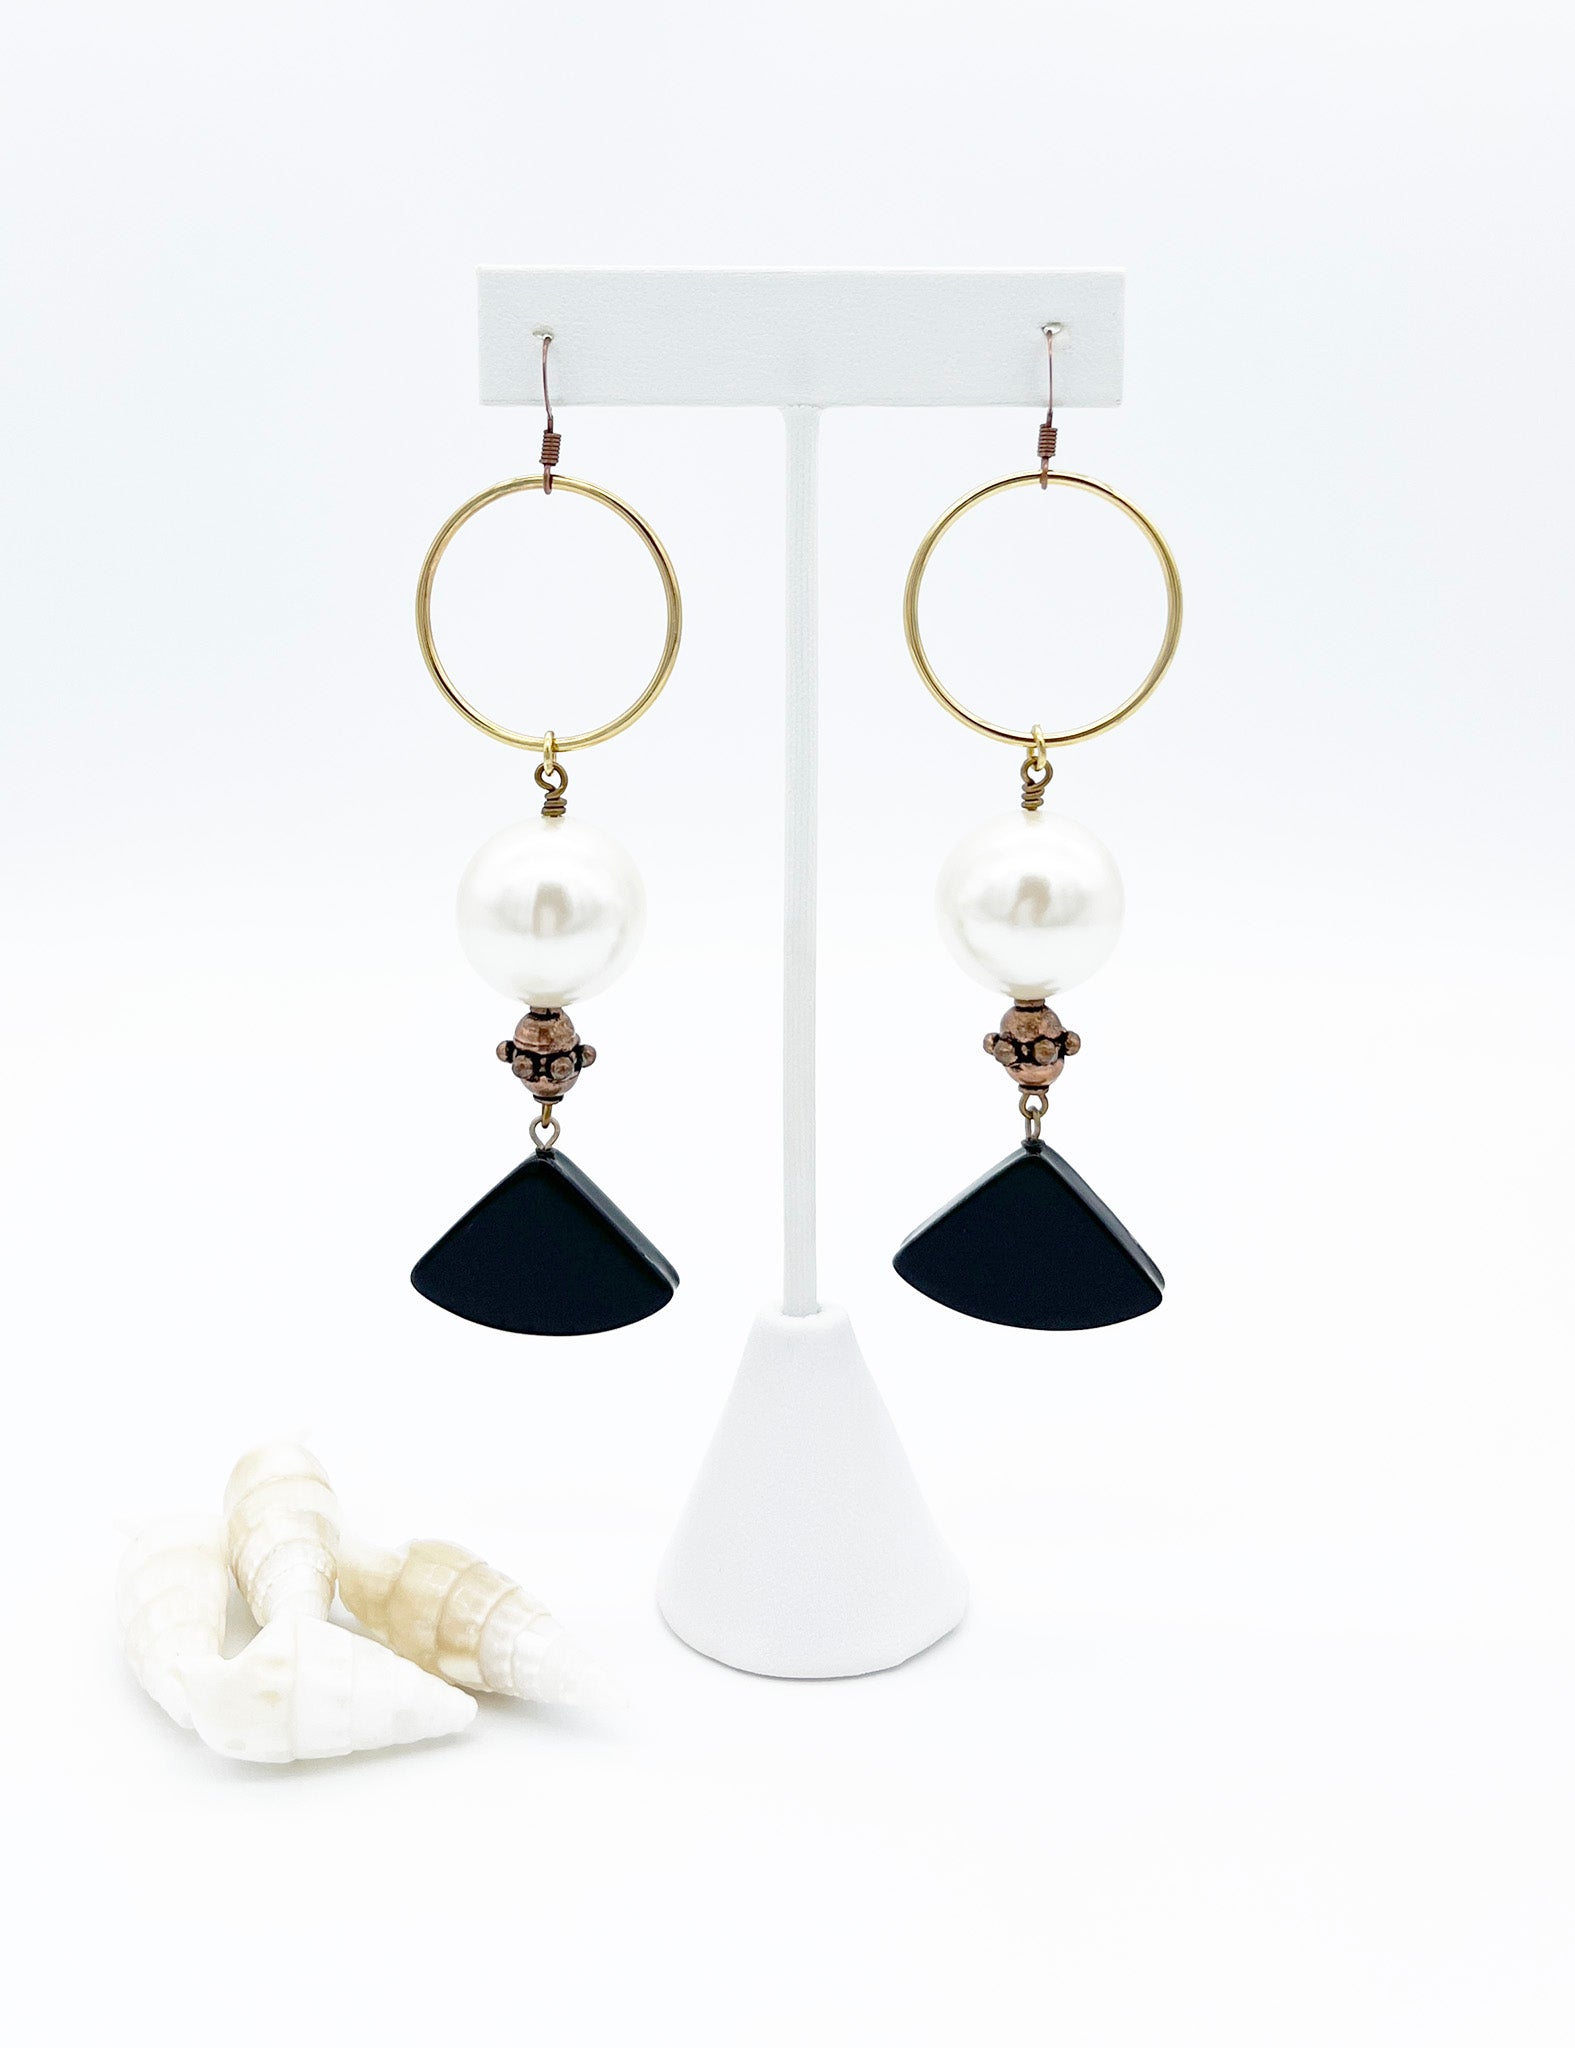 Symmetrical pearl and acrylic earrings